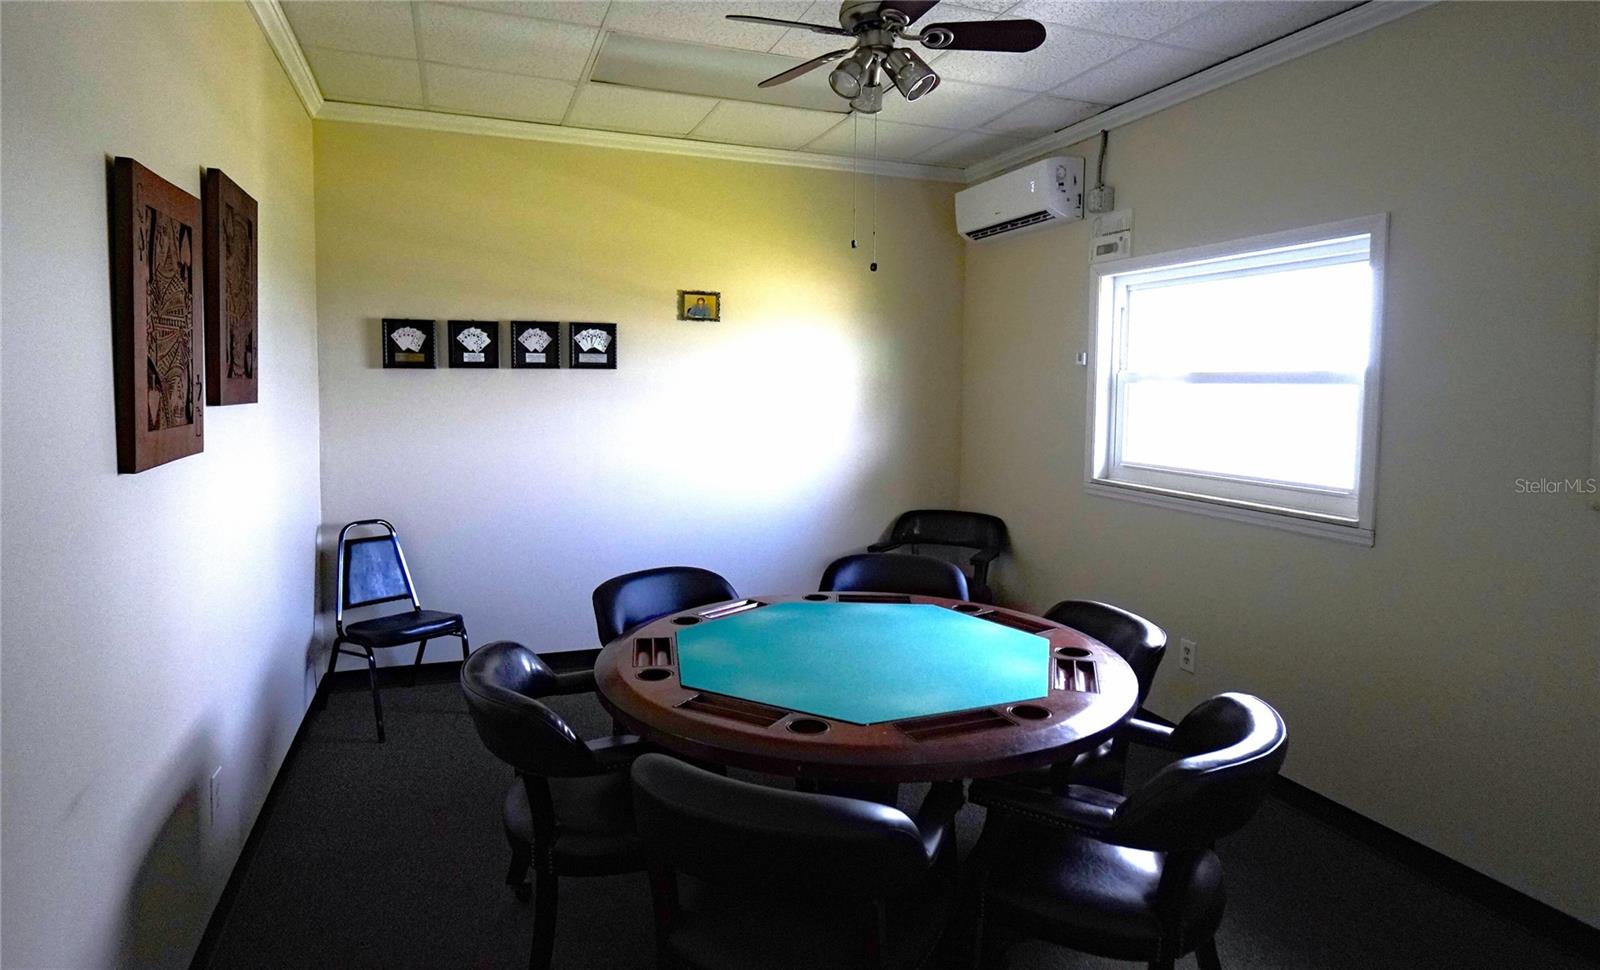 Poker / Card Game room